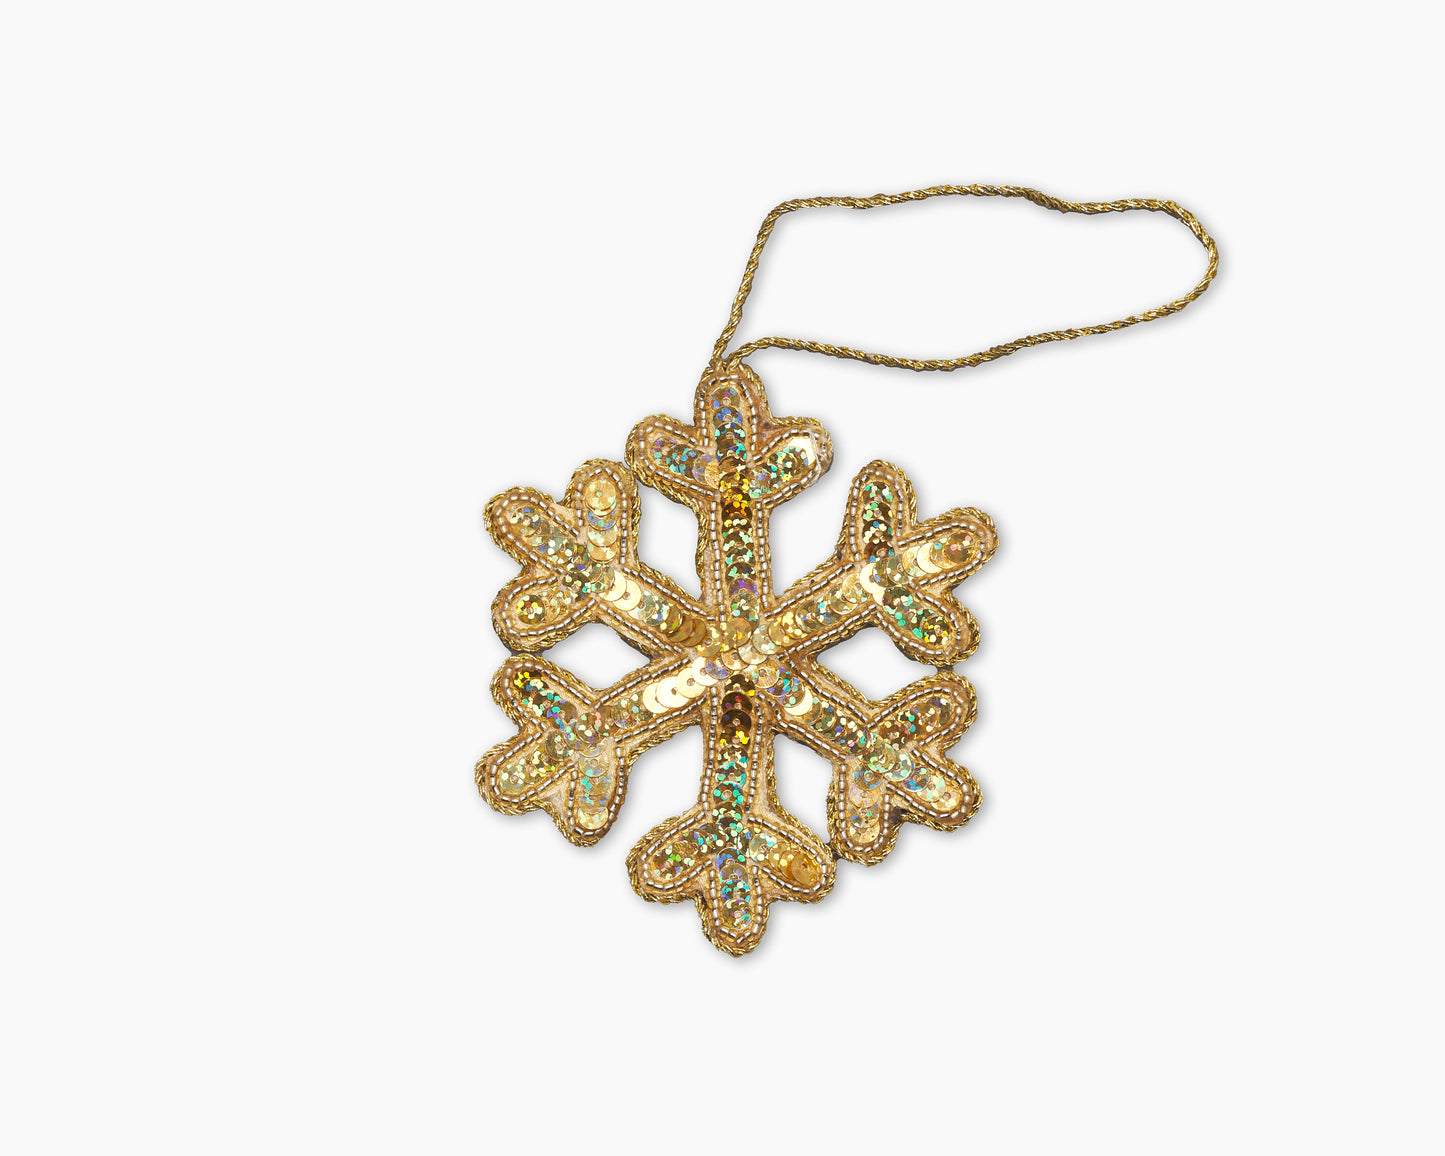 Snowflake Gold Ornament